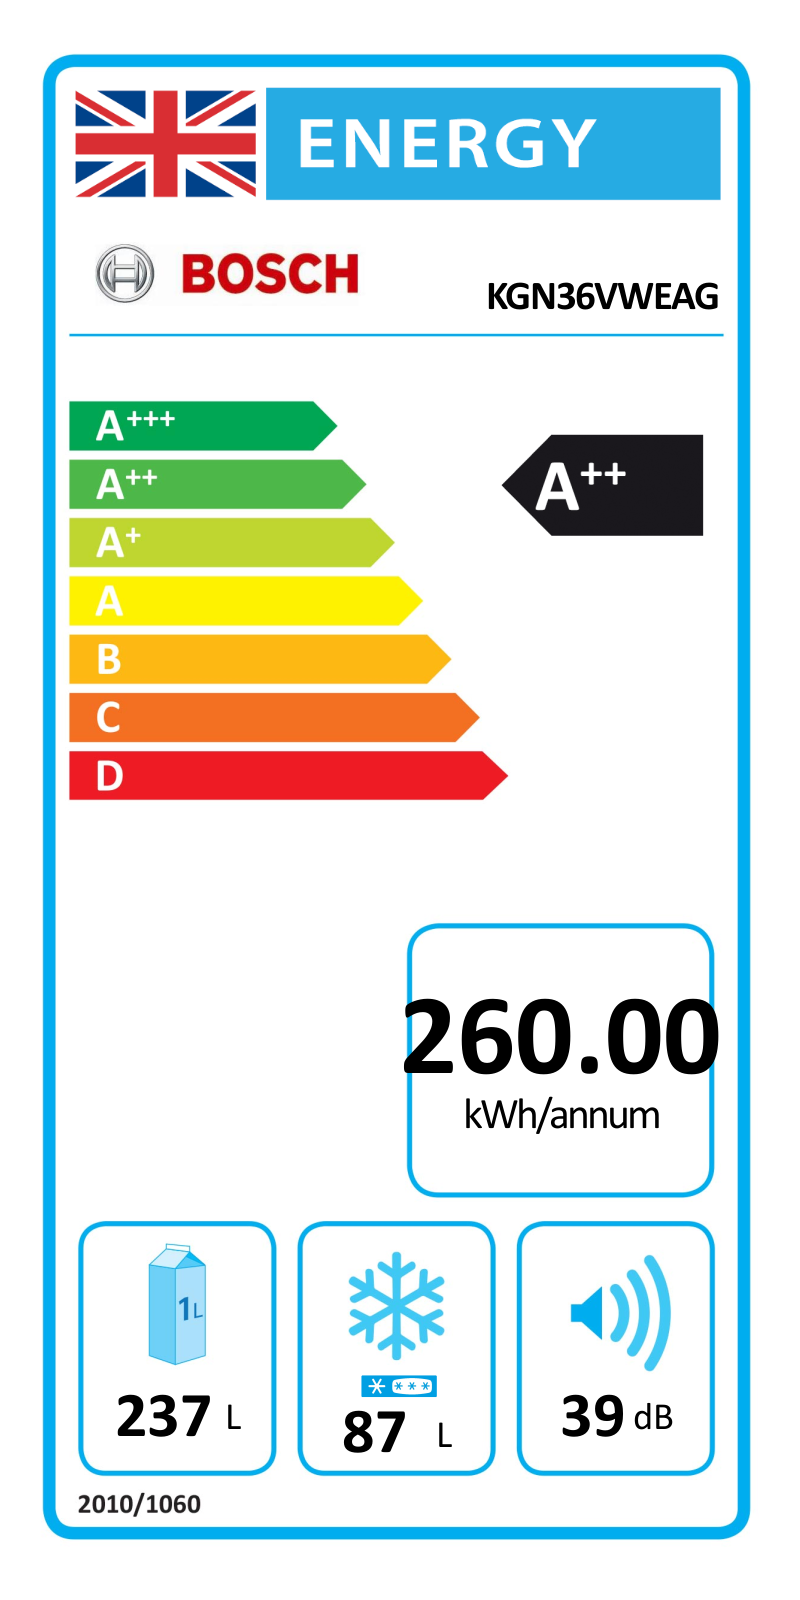 Bosch KGN36VWEAG EU Energy Label